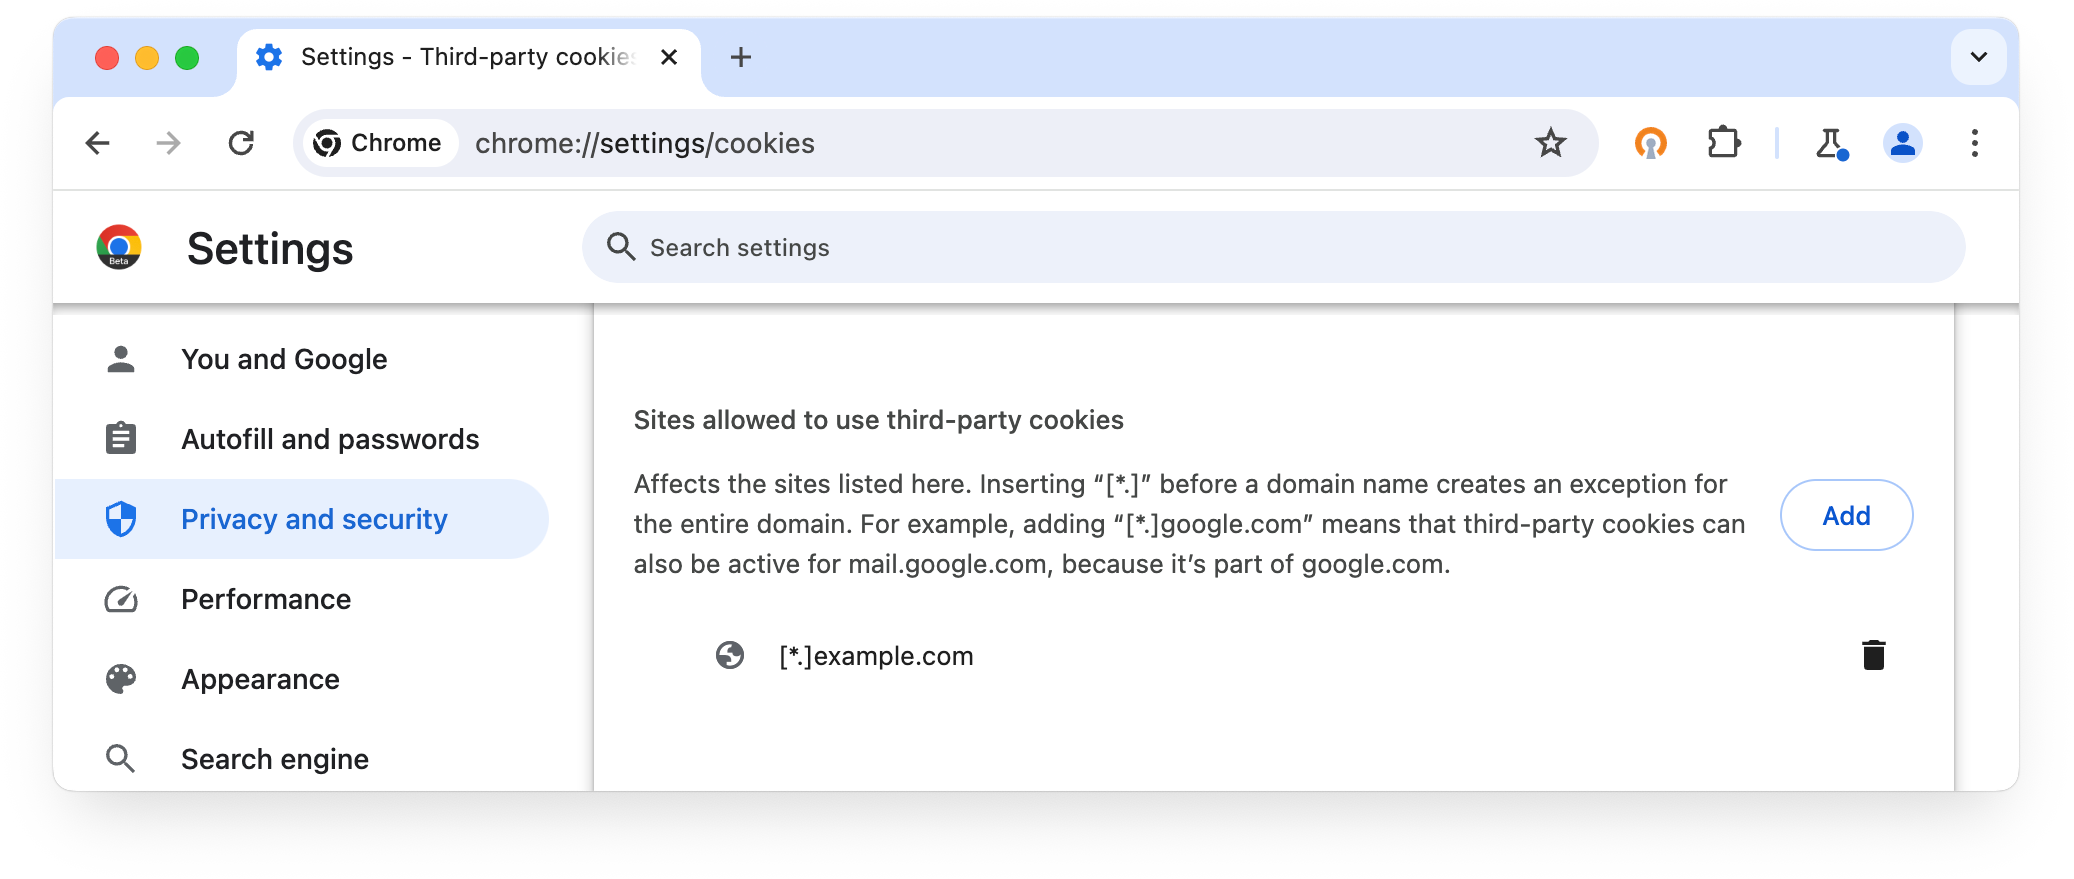 chrome://settings/cookies: サードパーティ Cookie の使用が許可されているサイト